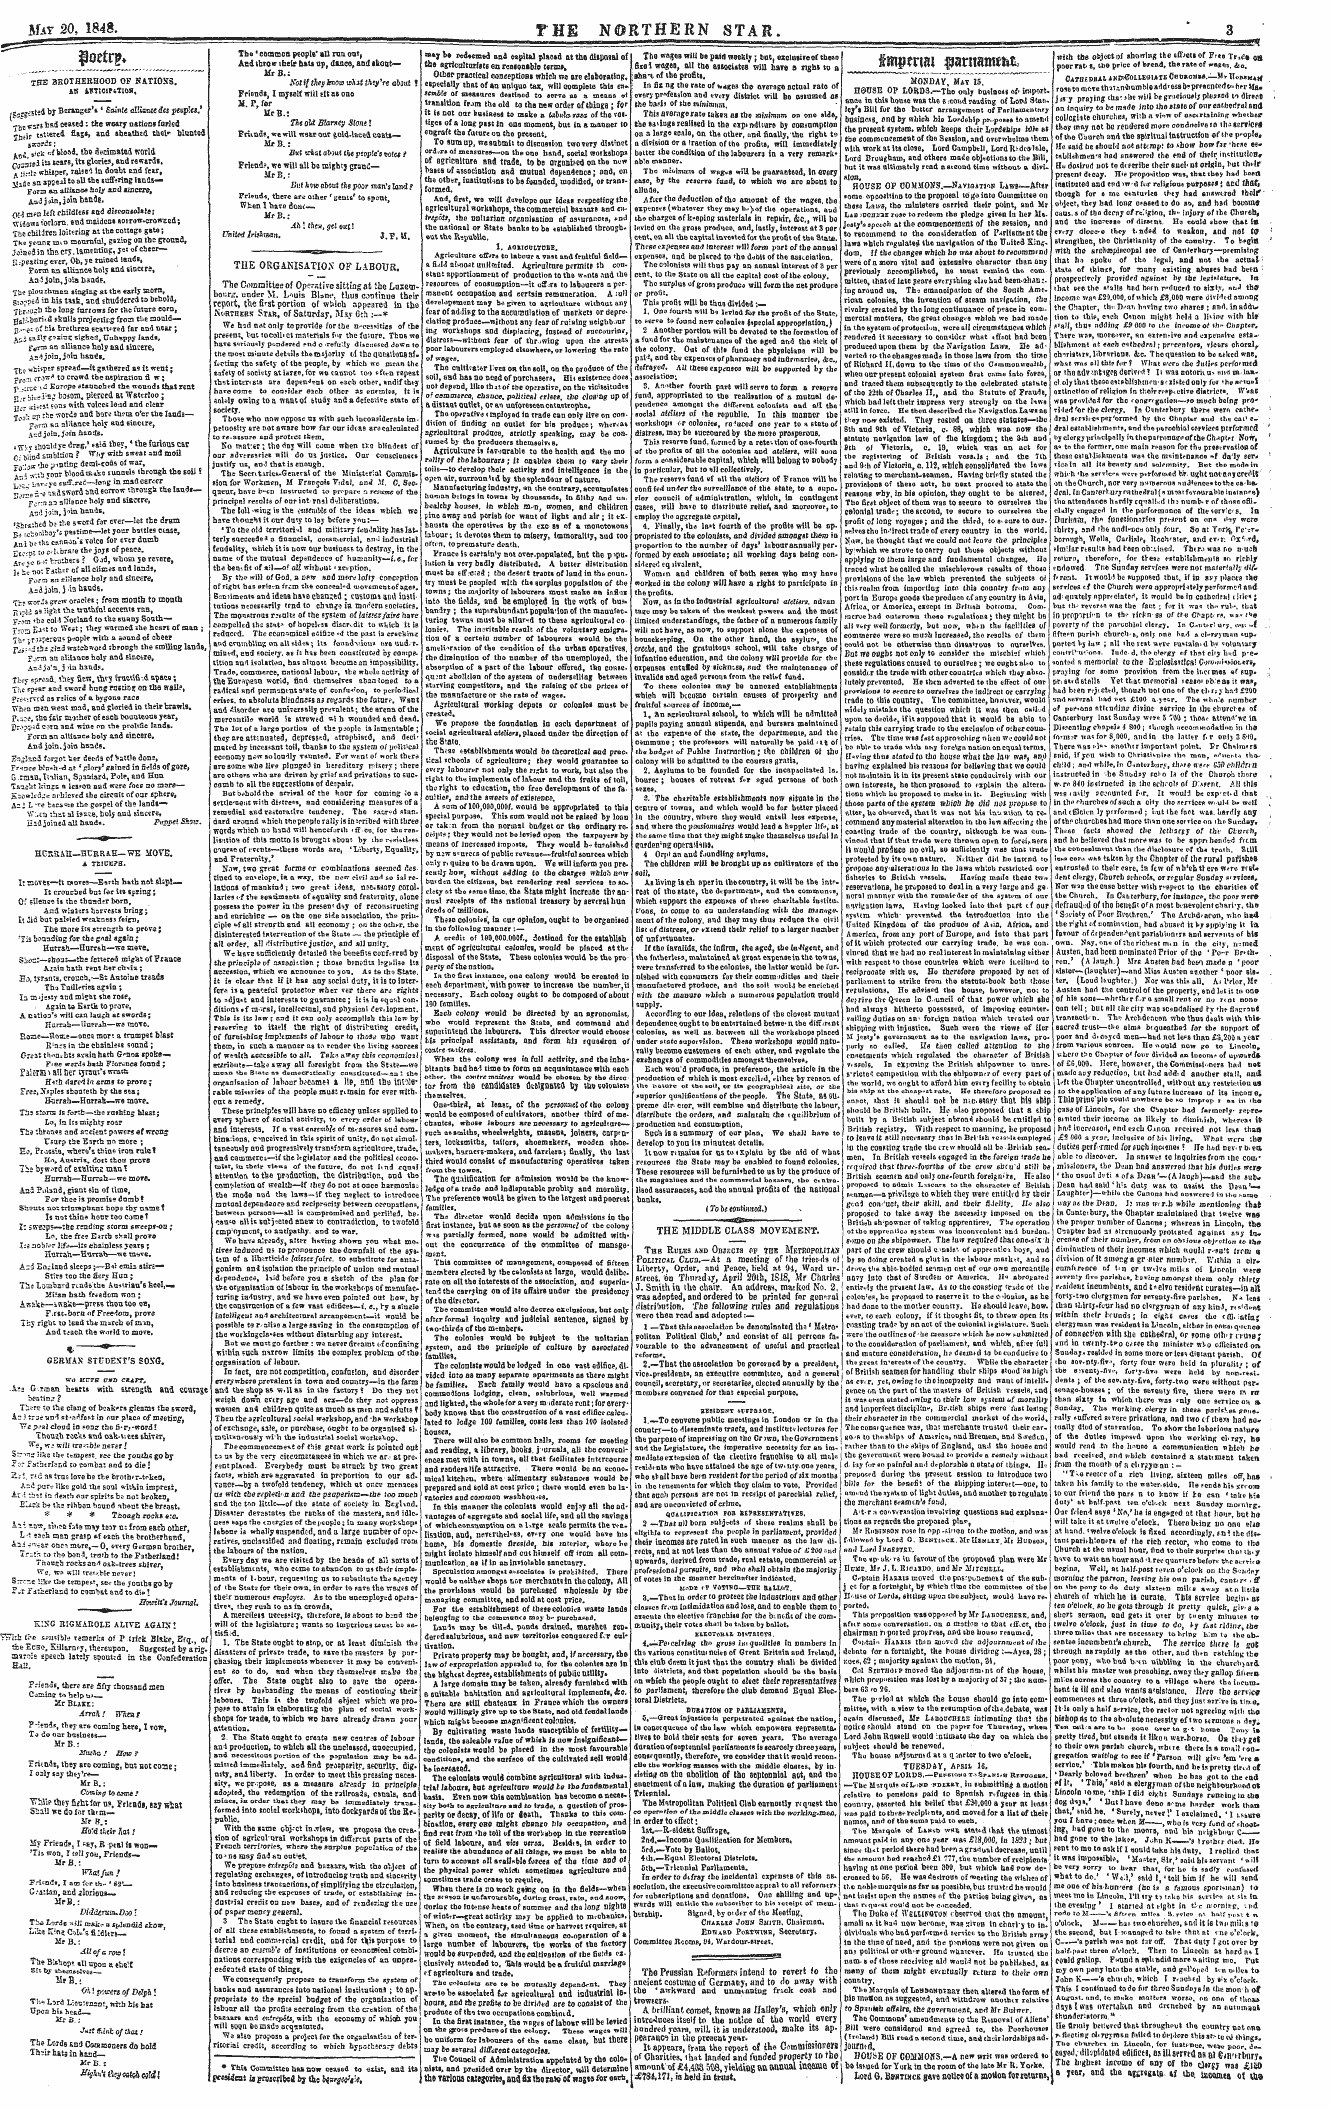 Northern Star (1837-1852): jS F Y, 3rd edition - Besidbnt 6cffbaoe. 1.—To Convene Public ...